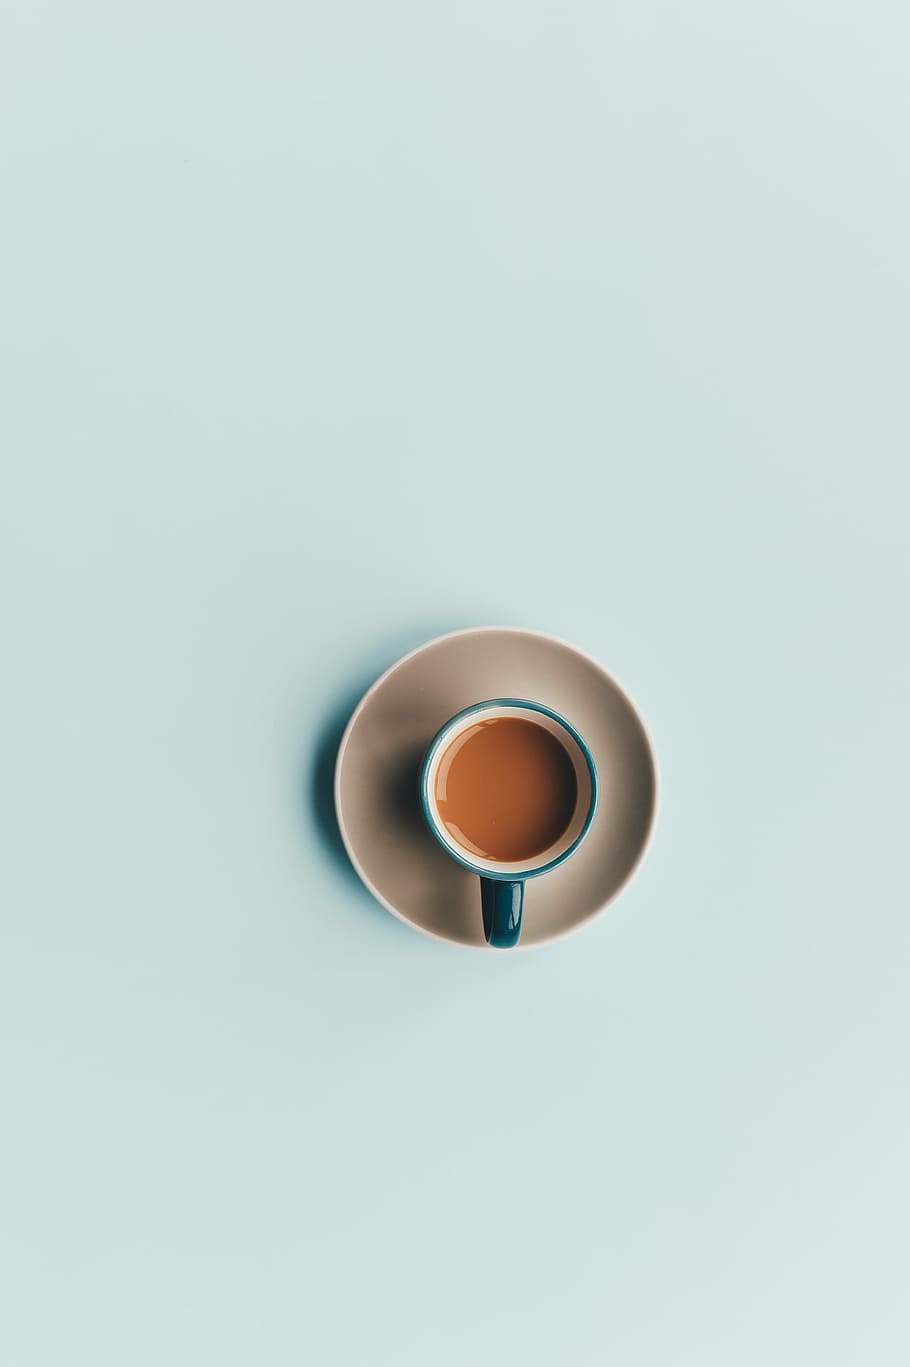 Plain, minimalistic coffee, brown, crema, cup, simplistic, white